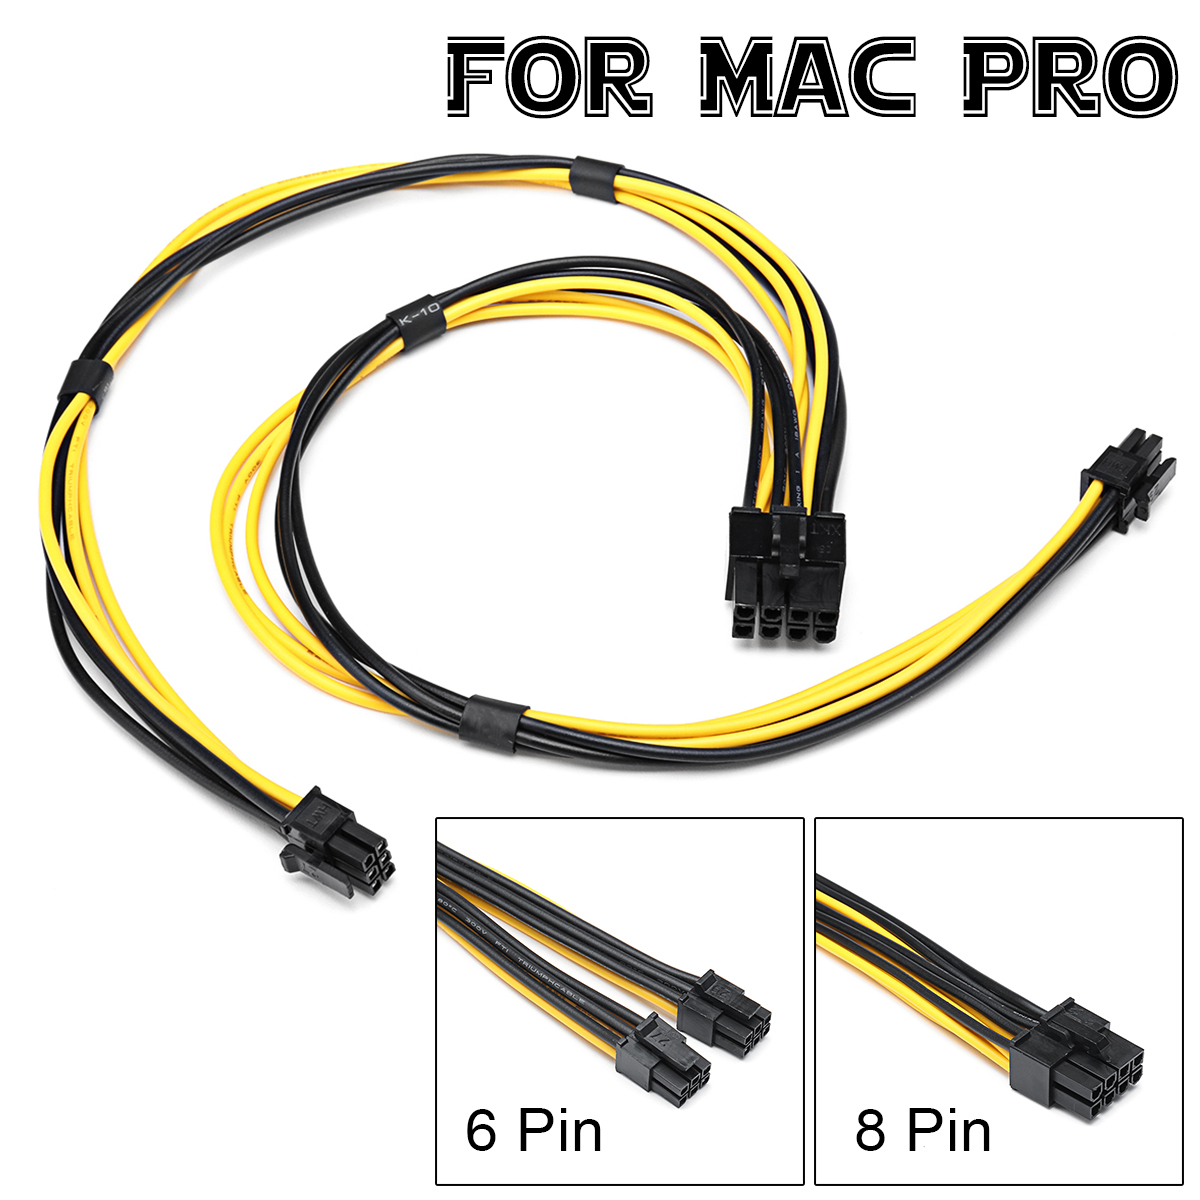 Dual-Mini-6-Pin-To-8-Pin-Male-PCI-E-Power-Cable-For-Mac-Pro-Video-Card-1344465